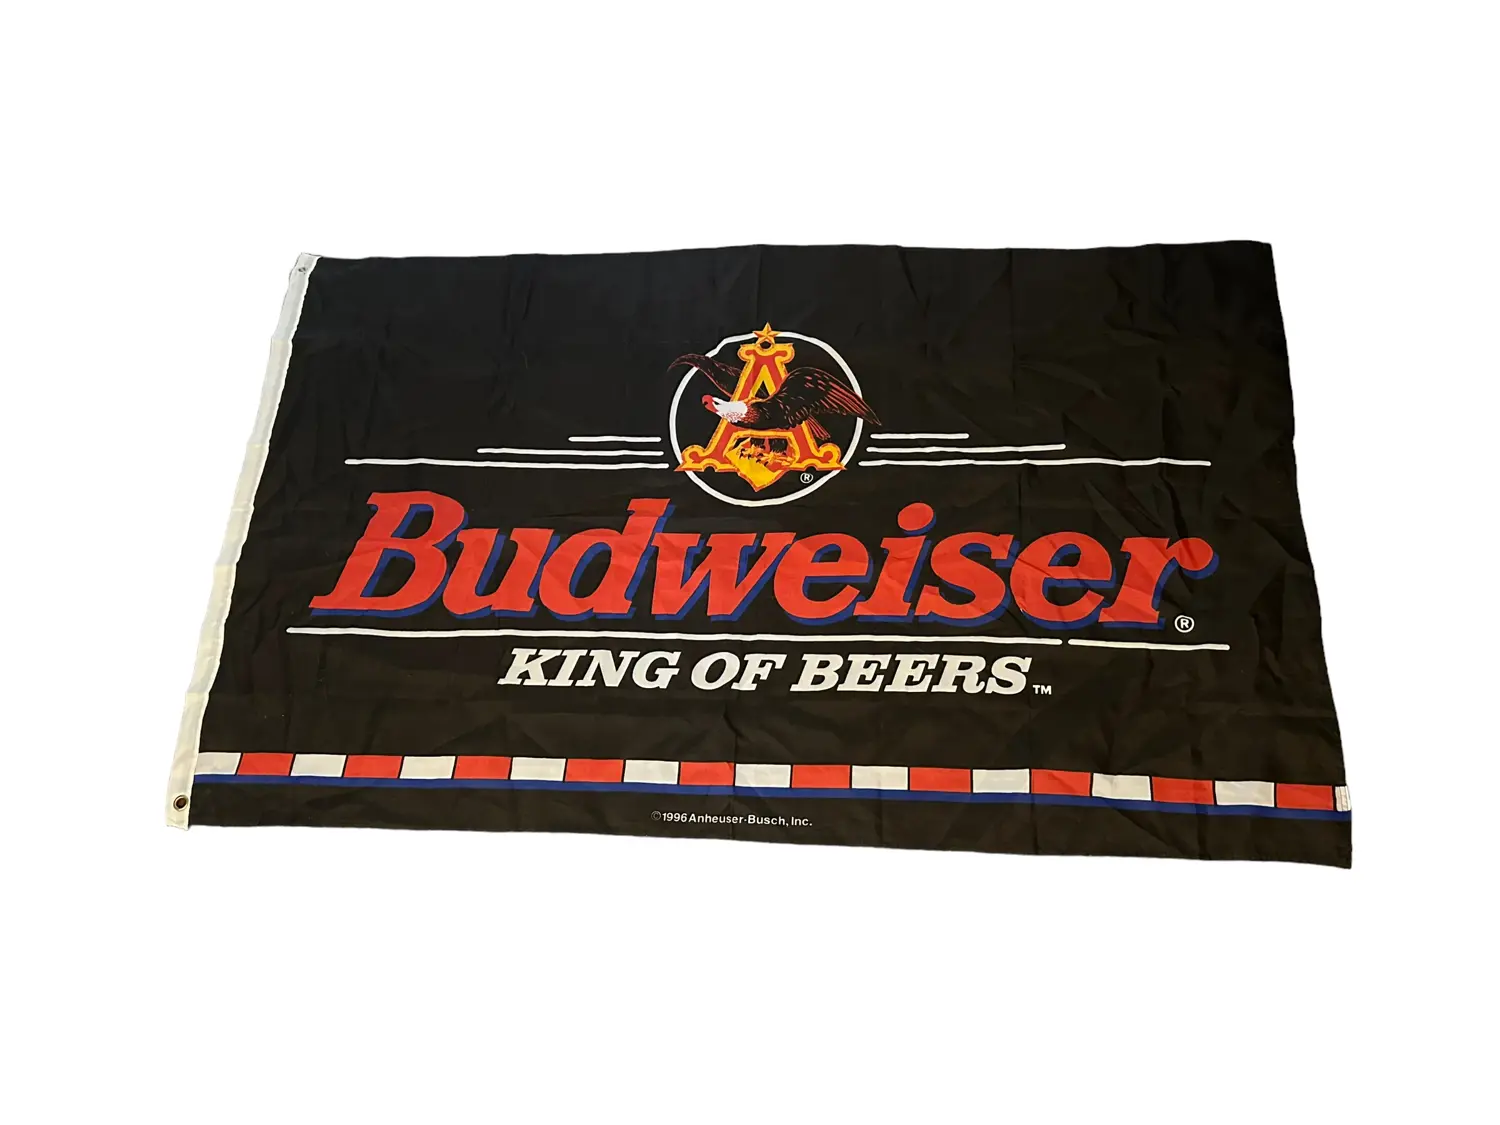 1996 Budweiser flag